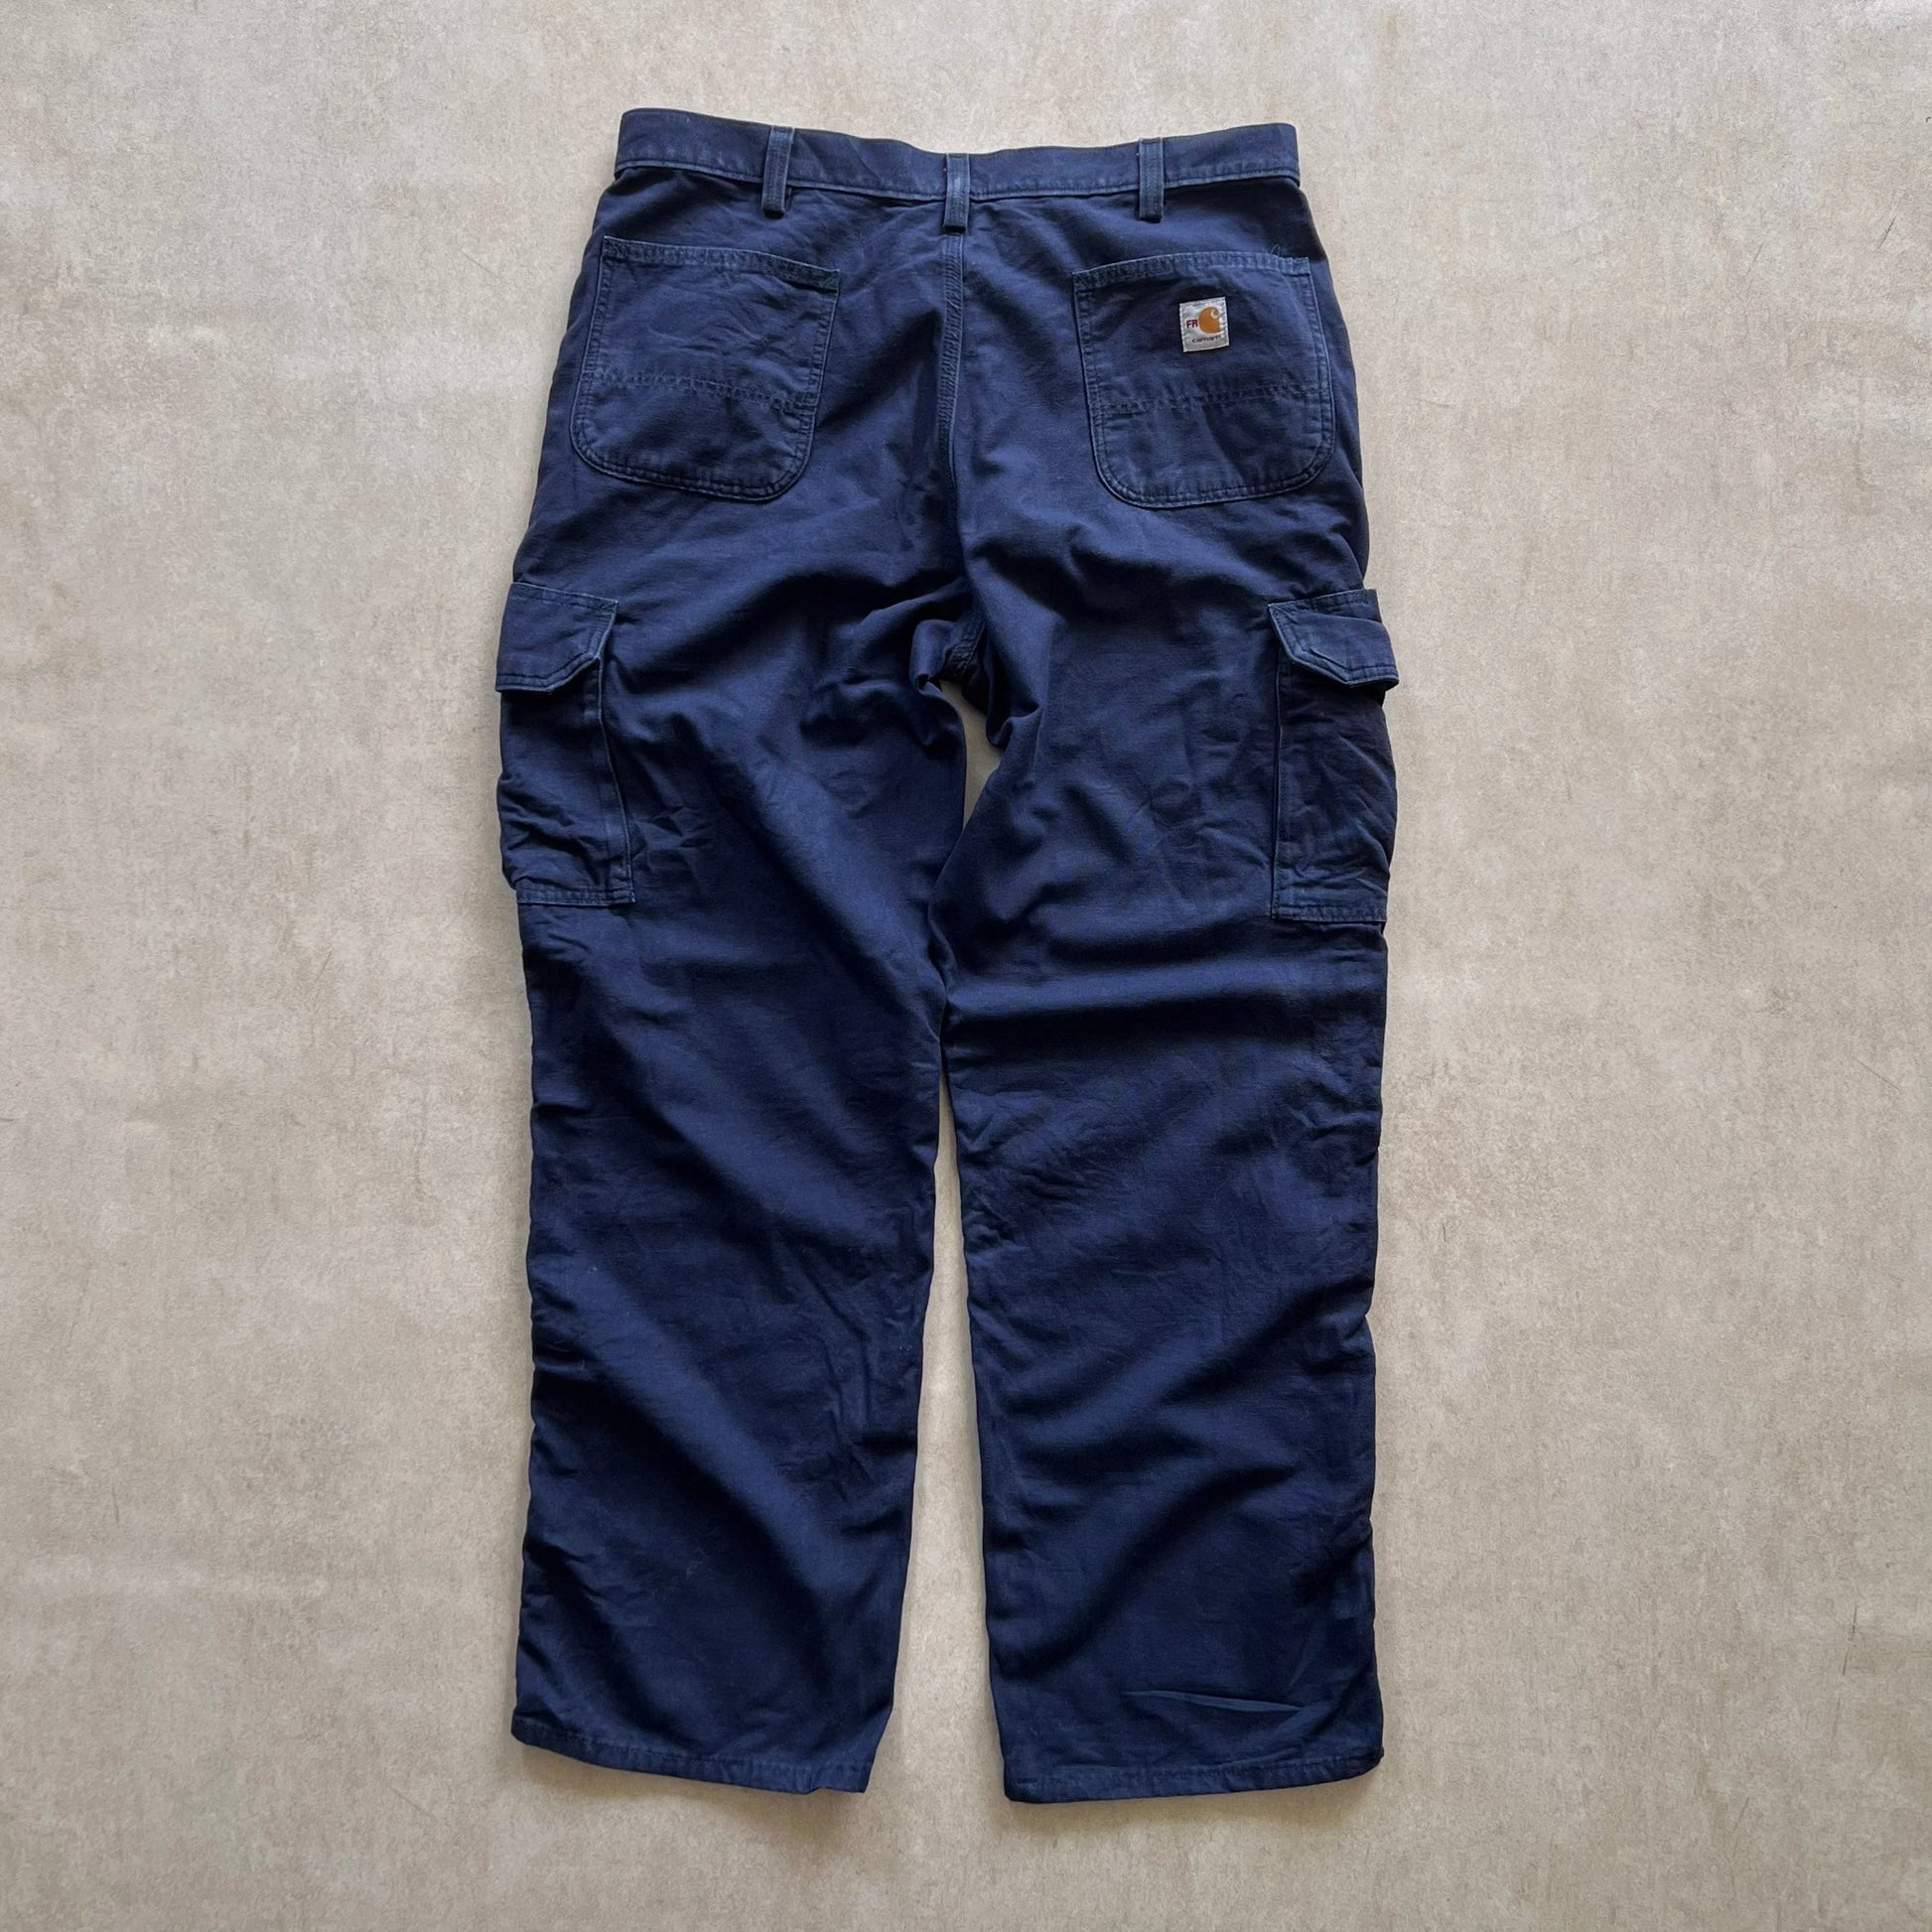 Carhartt-Flame-Resistant-Navy-Workwear-Jeans-38in-sullivansvintage